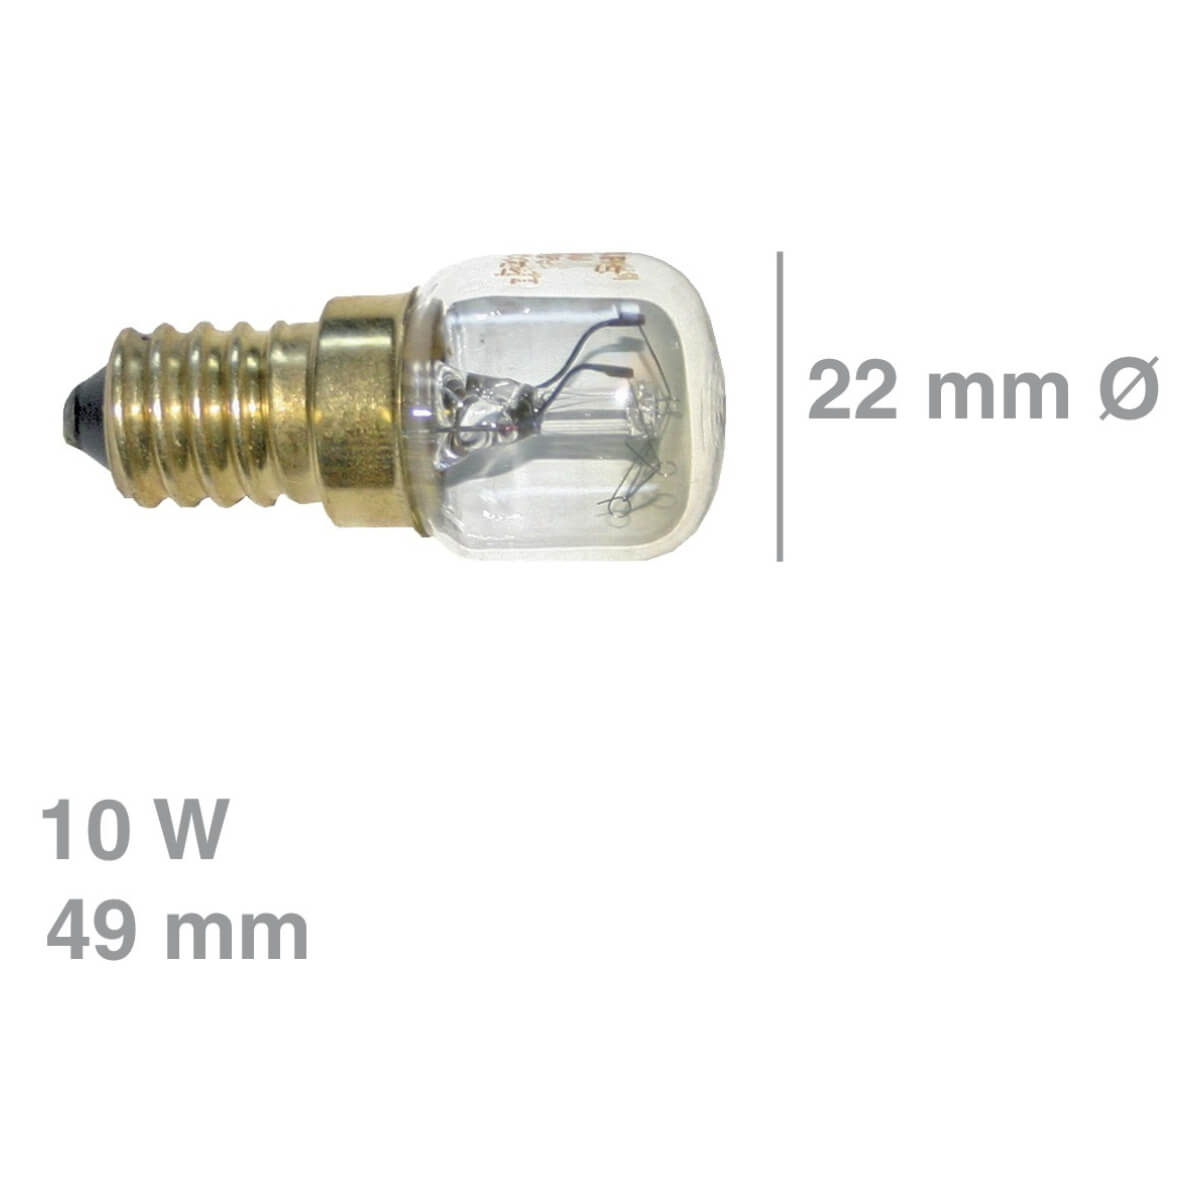 Lampe E14 10W Miele 4263810 22mmØ 49mm 230V für Trockner (EA-4263810)